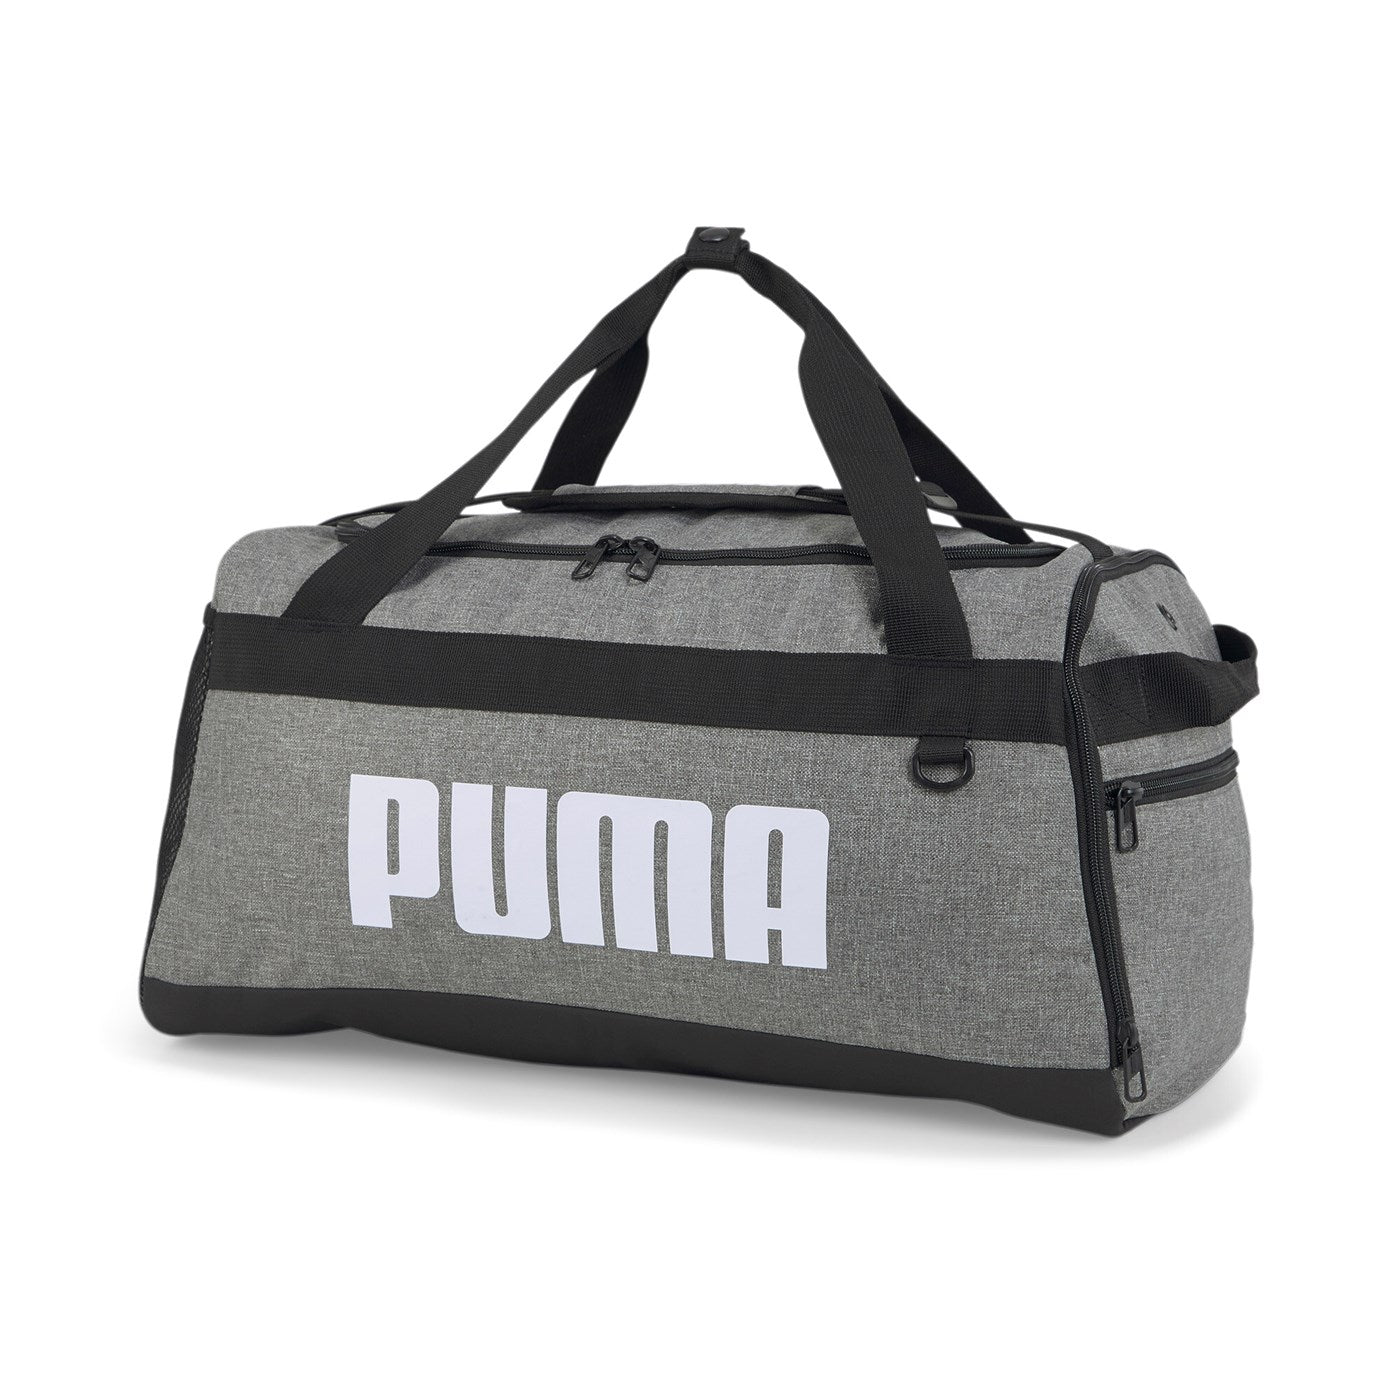 Puma borsone sportivo Challenger Duffel 079530 12 grigio